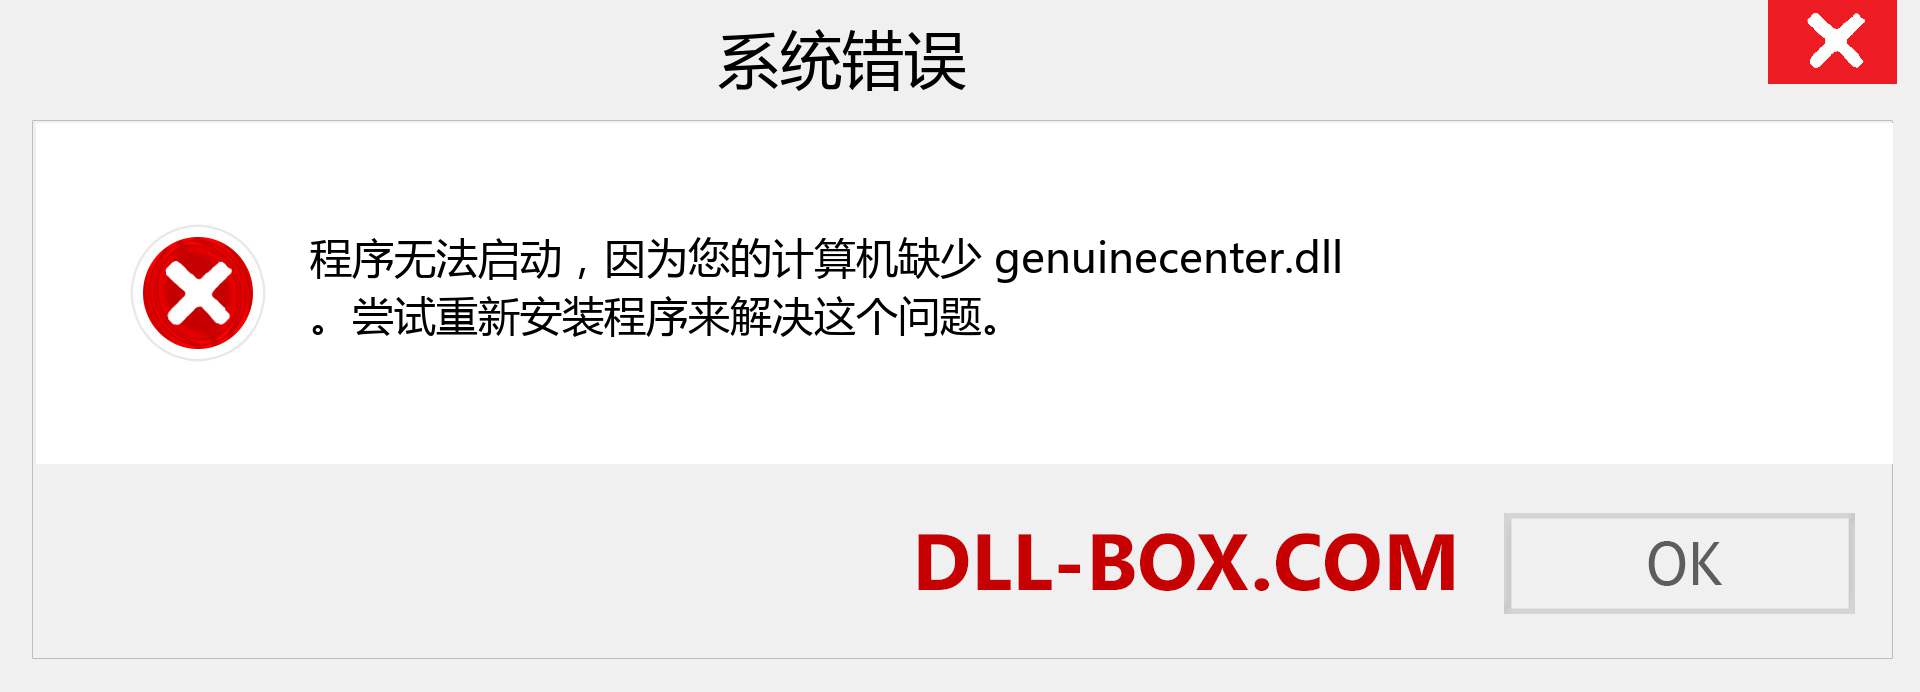 genuinecenter.dll 文件丢失？。 适用于 Windows 7、8、10 的下载 - 修复 Windows、照片、图像上的 genuinecenter dll 丢失错误